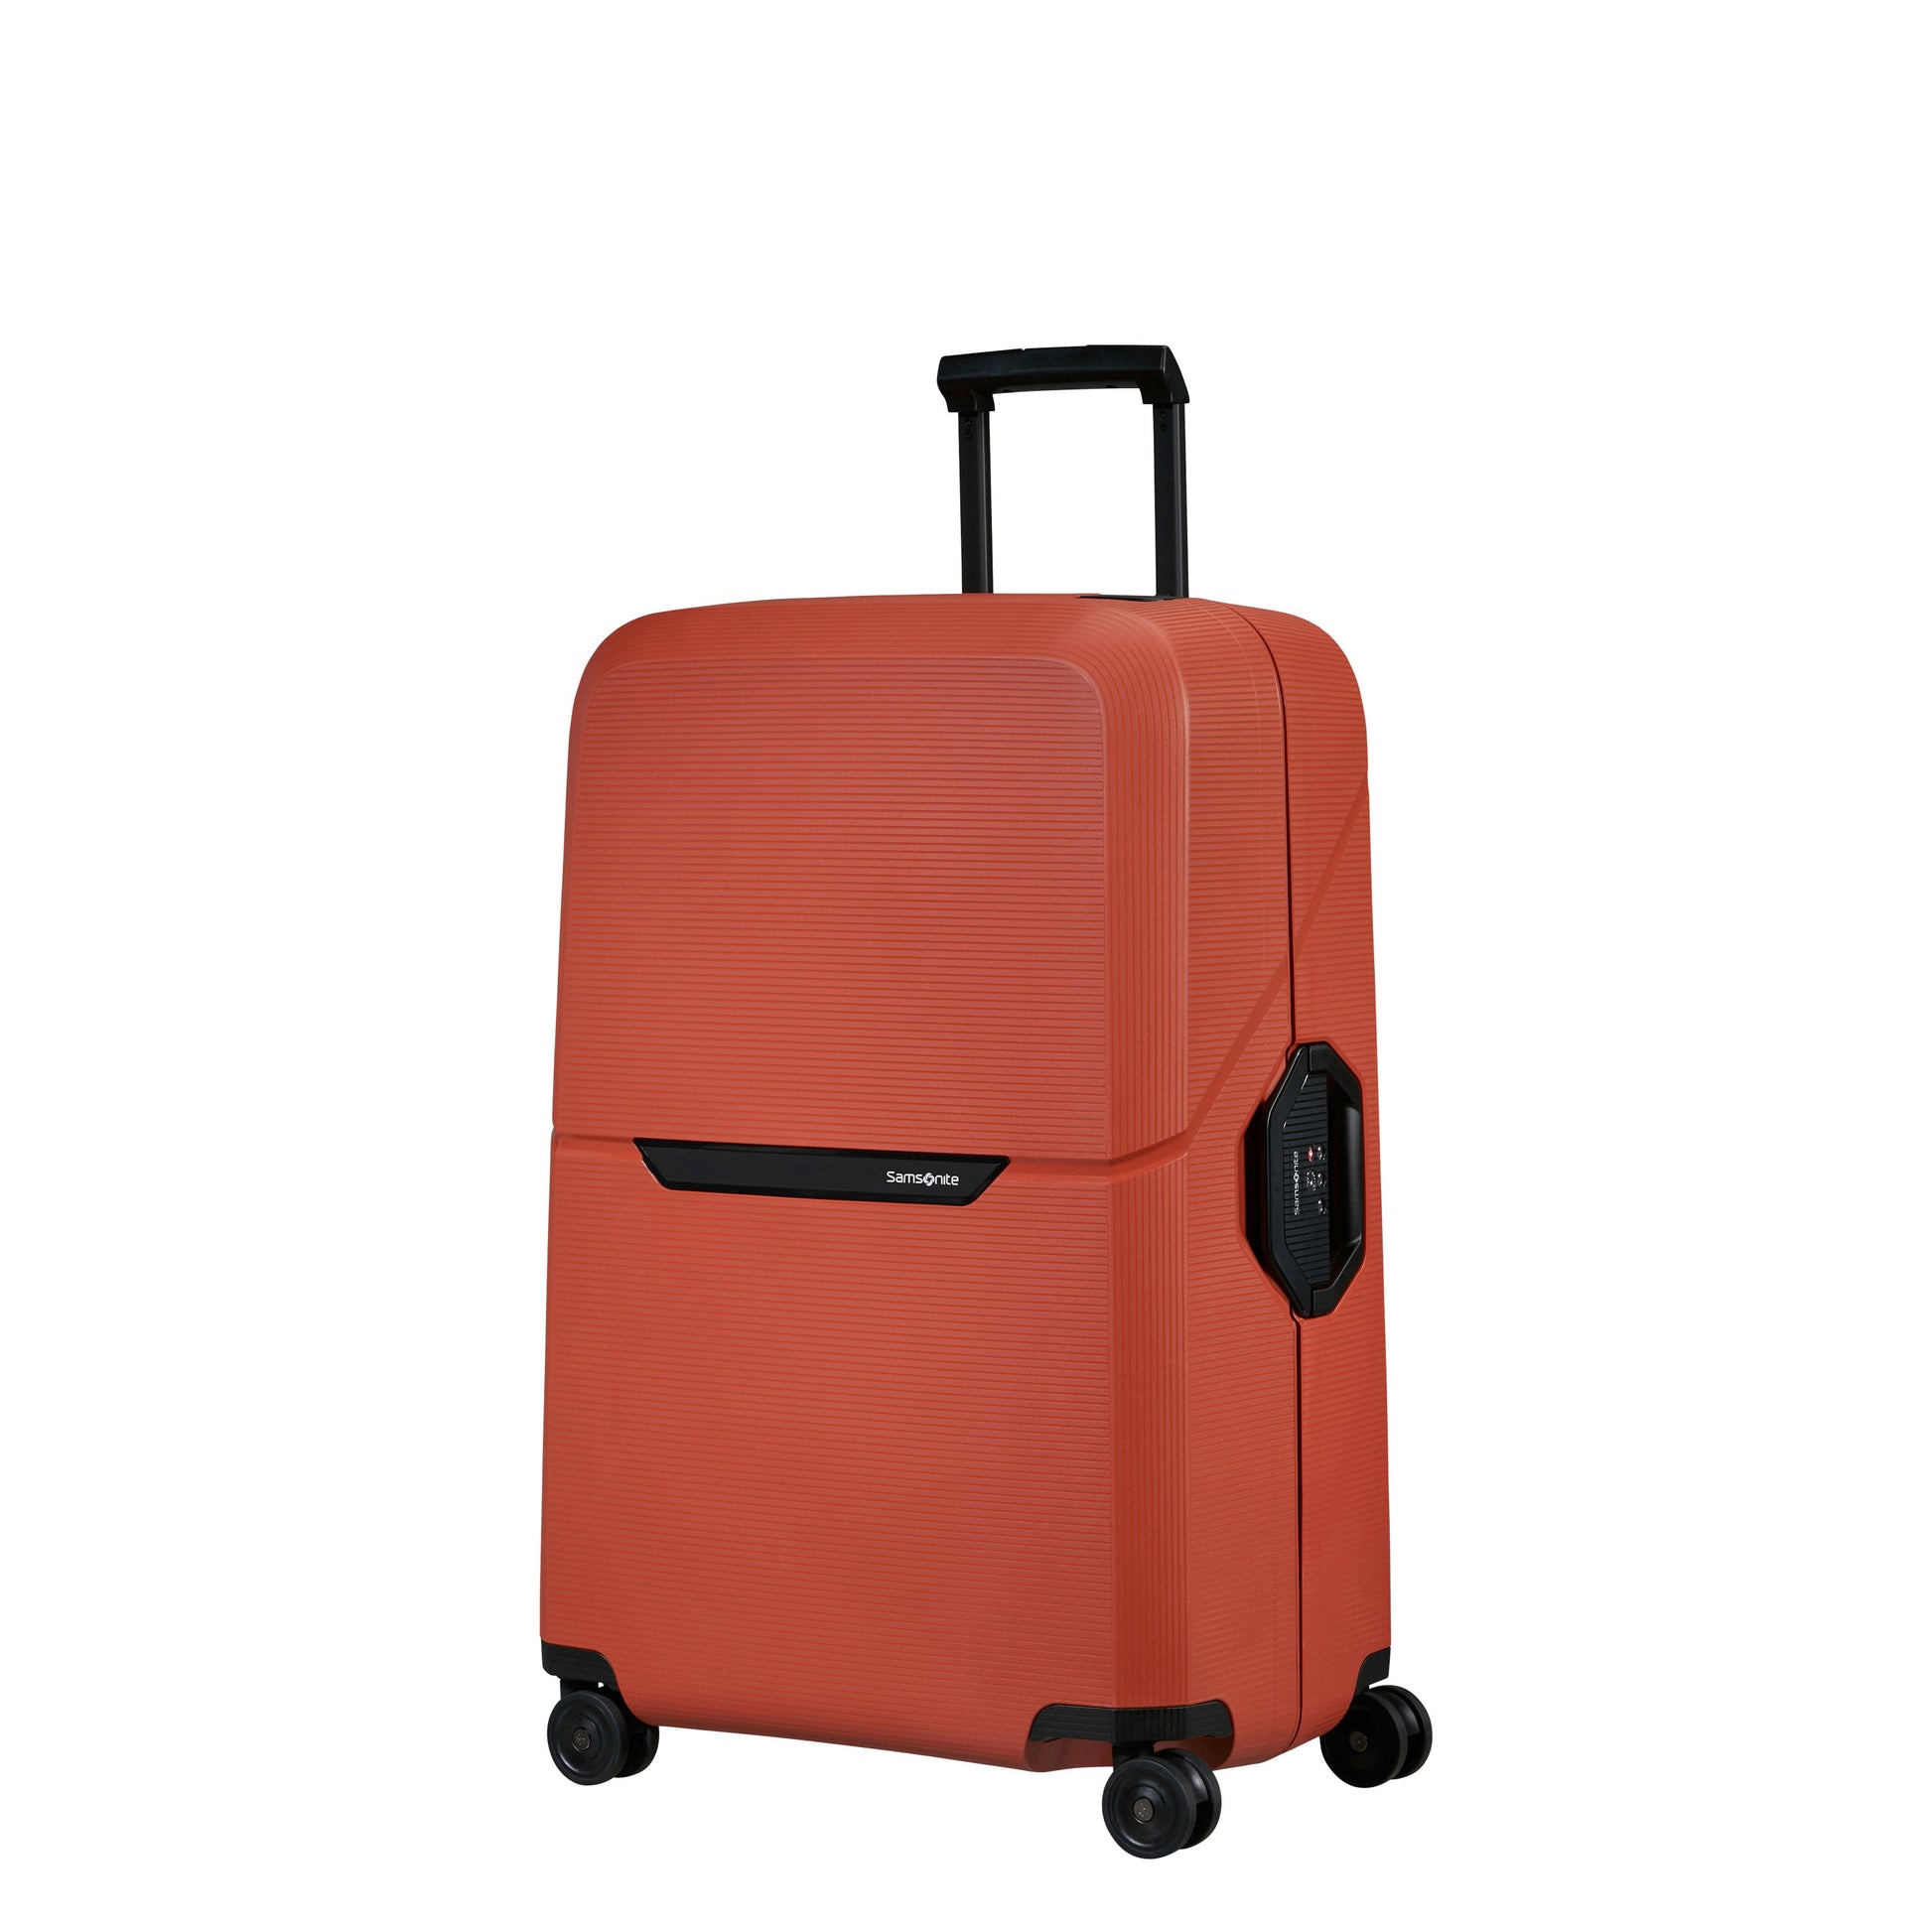 Samsonite Magnum ECO 3 Piece Spinner Luggage Set - Limited Edition: Maple Orange